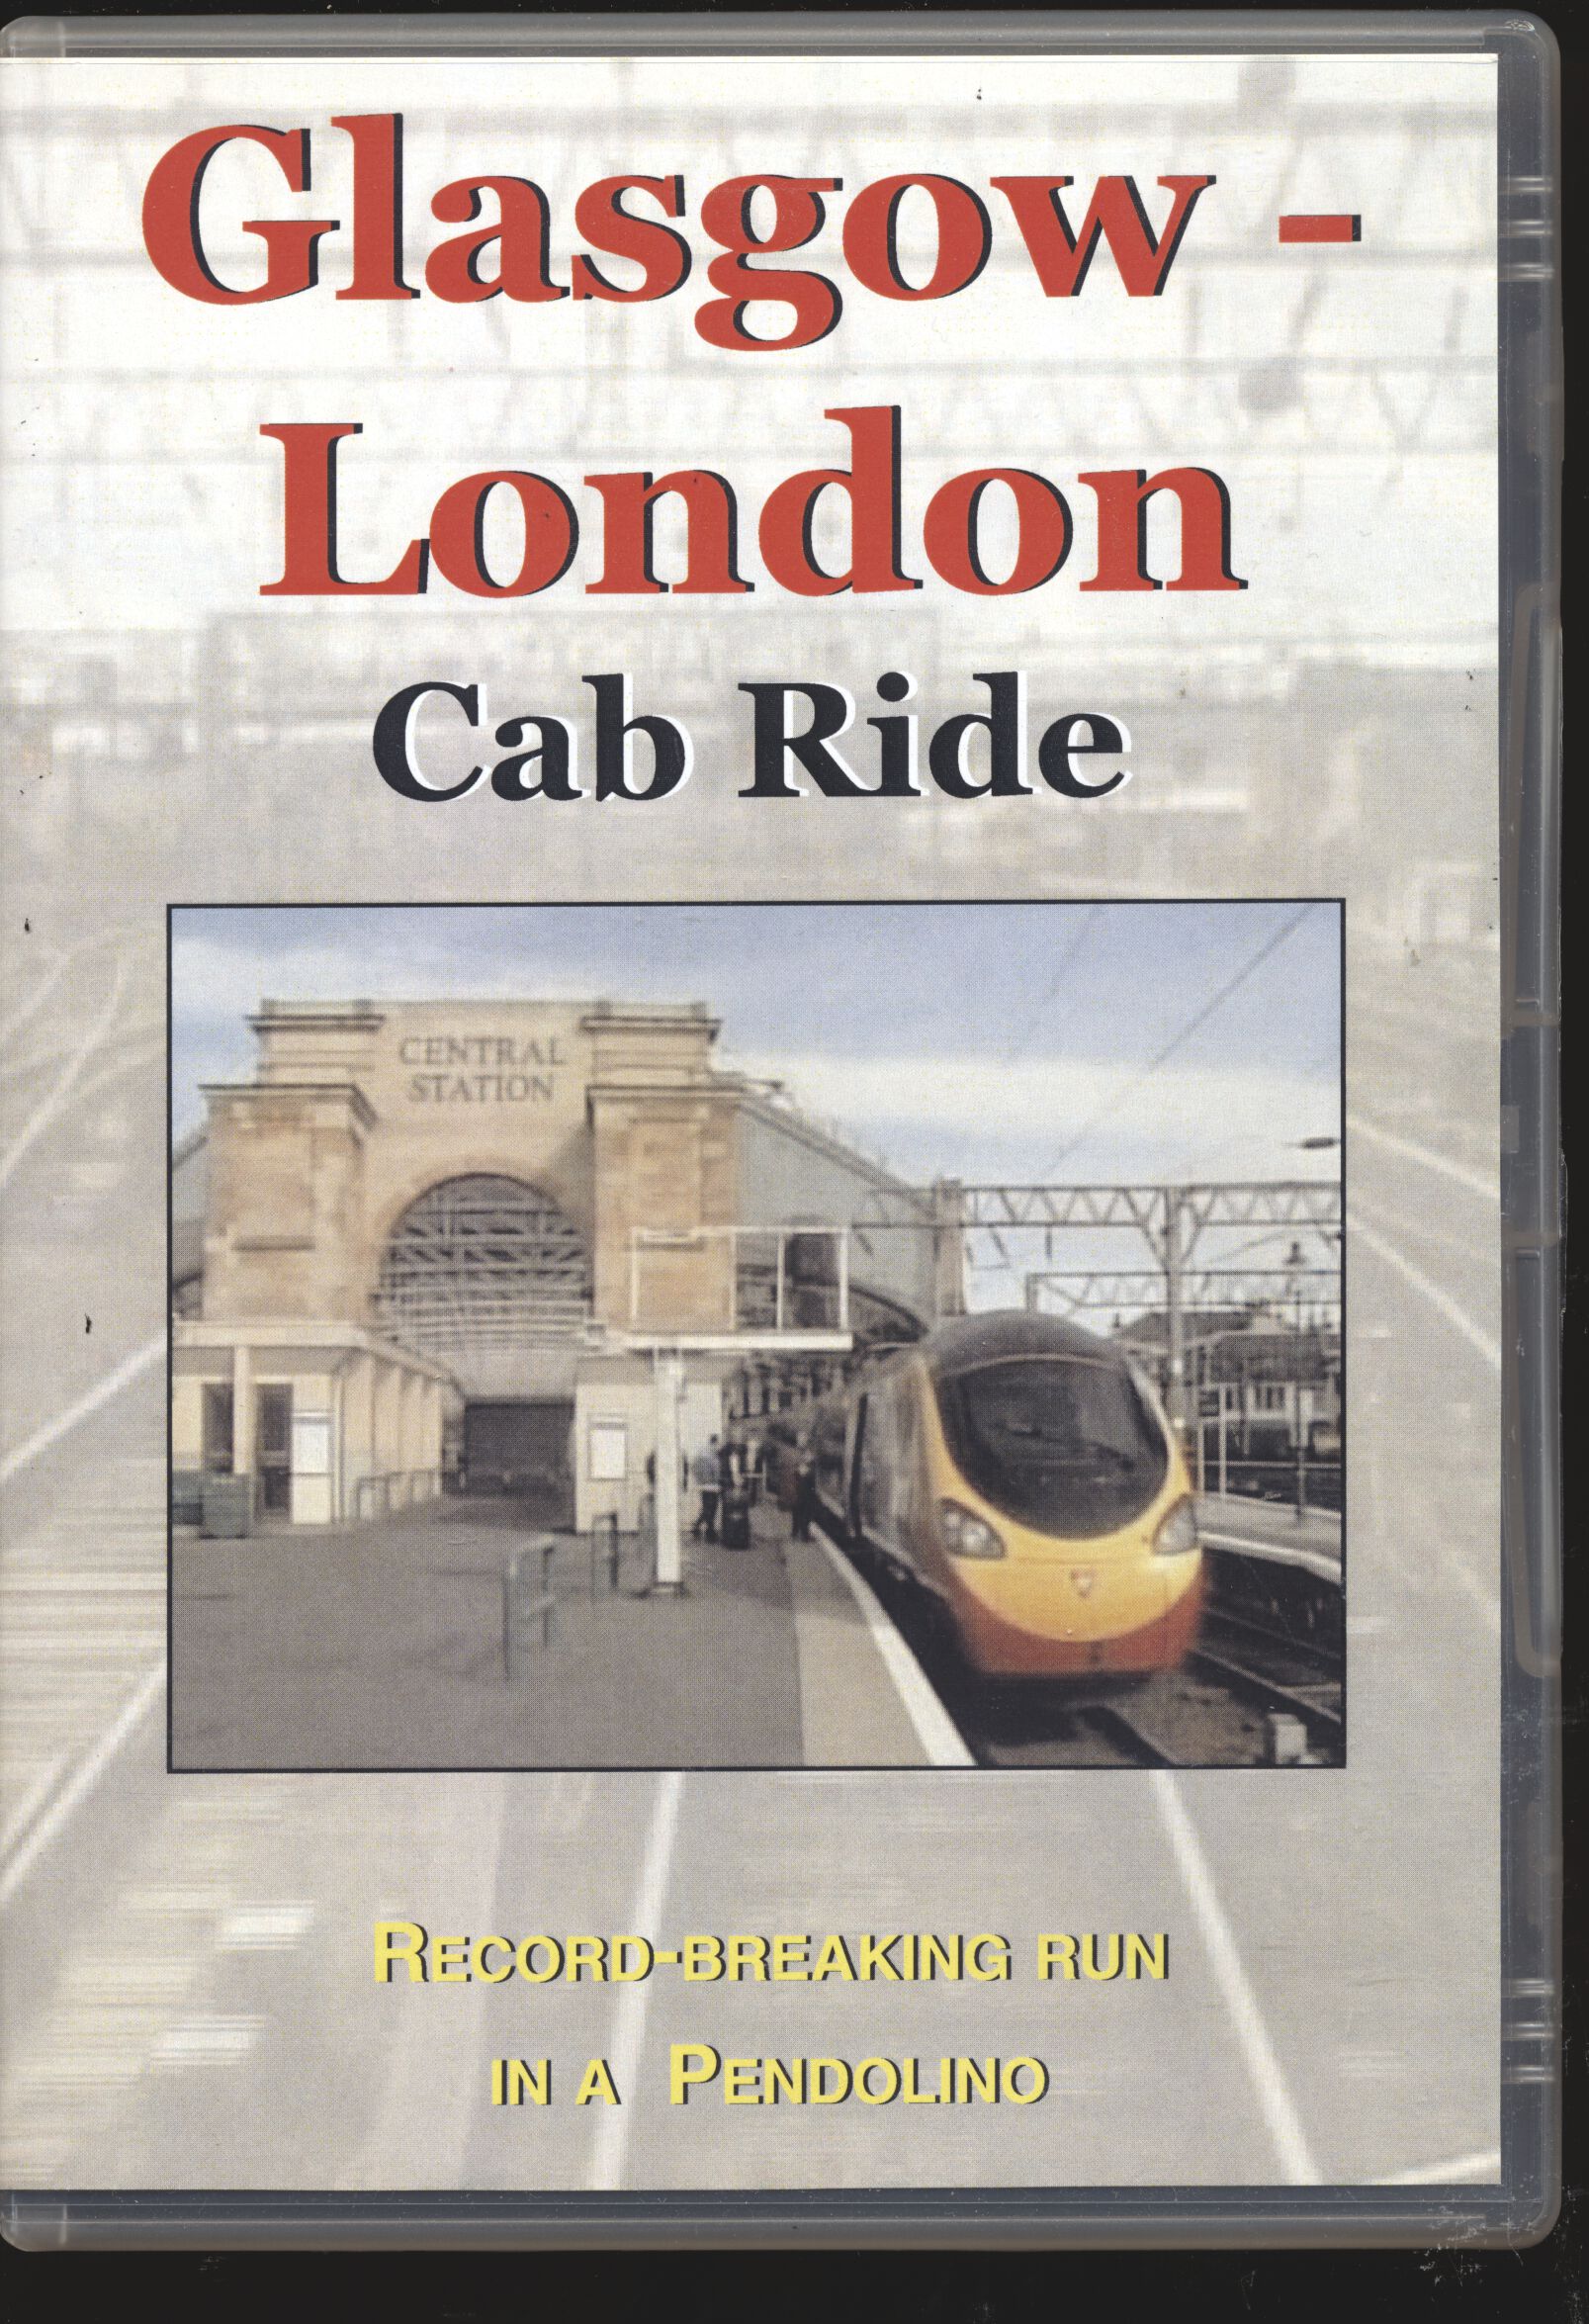 DVD: London - Glasgow Cab Ride 